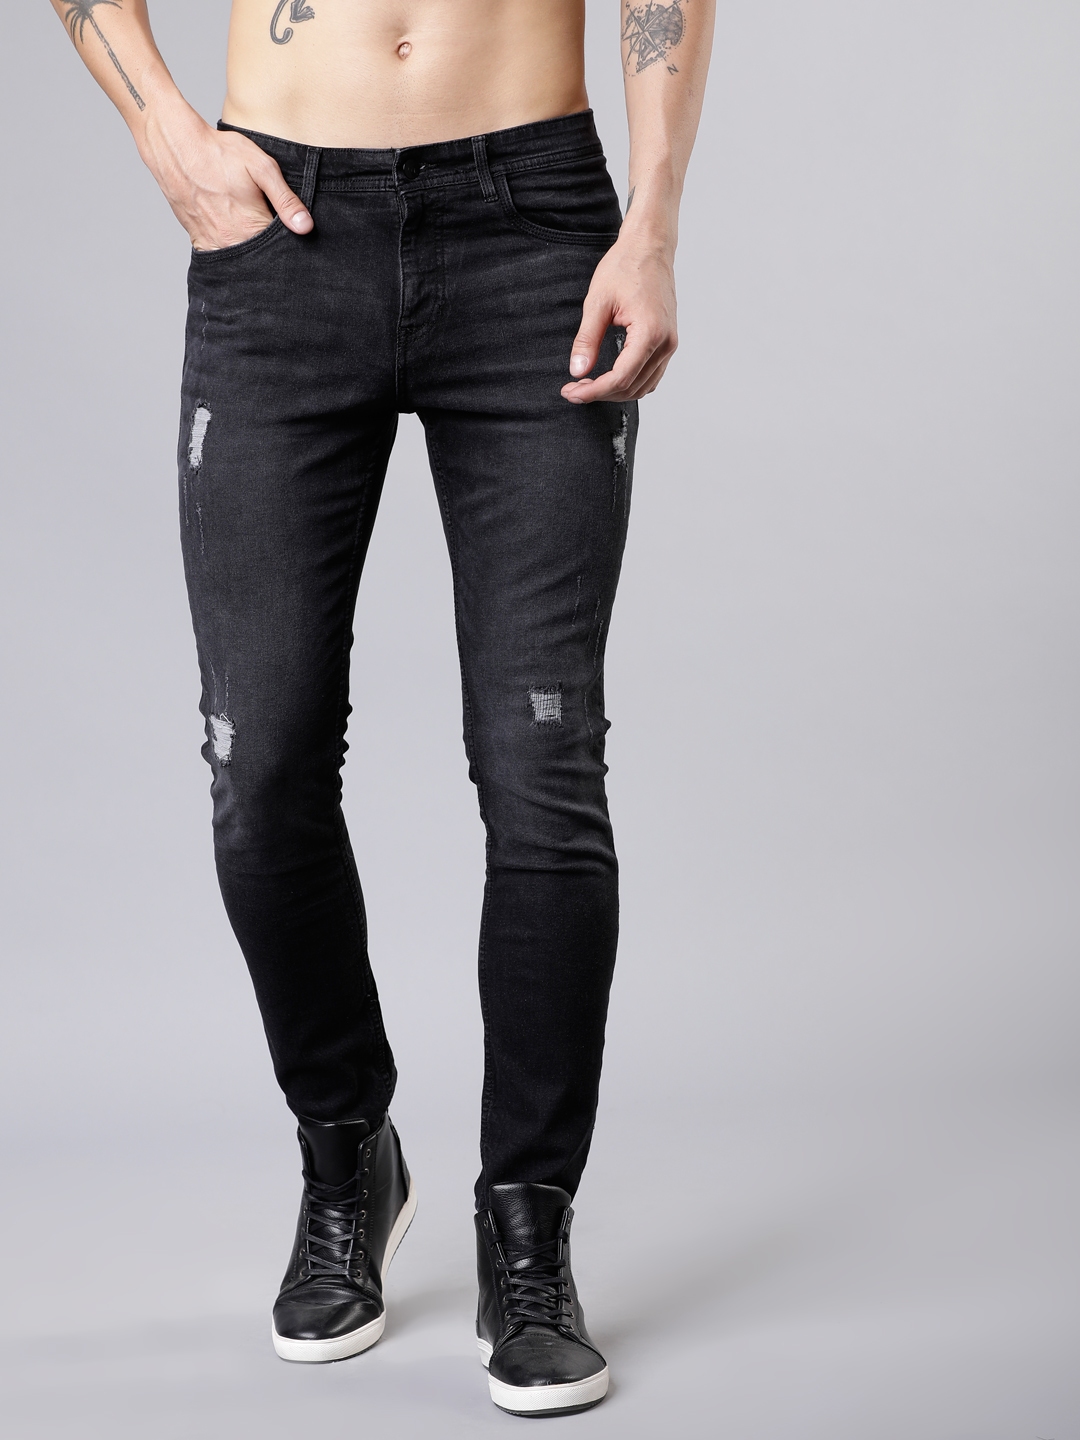 Buy Black Jeans for Men by DNMX Online  Ajiocom